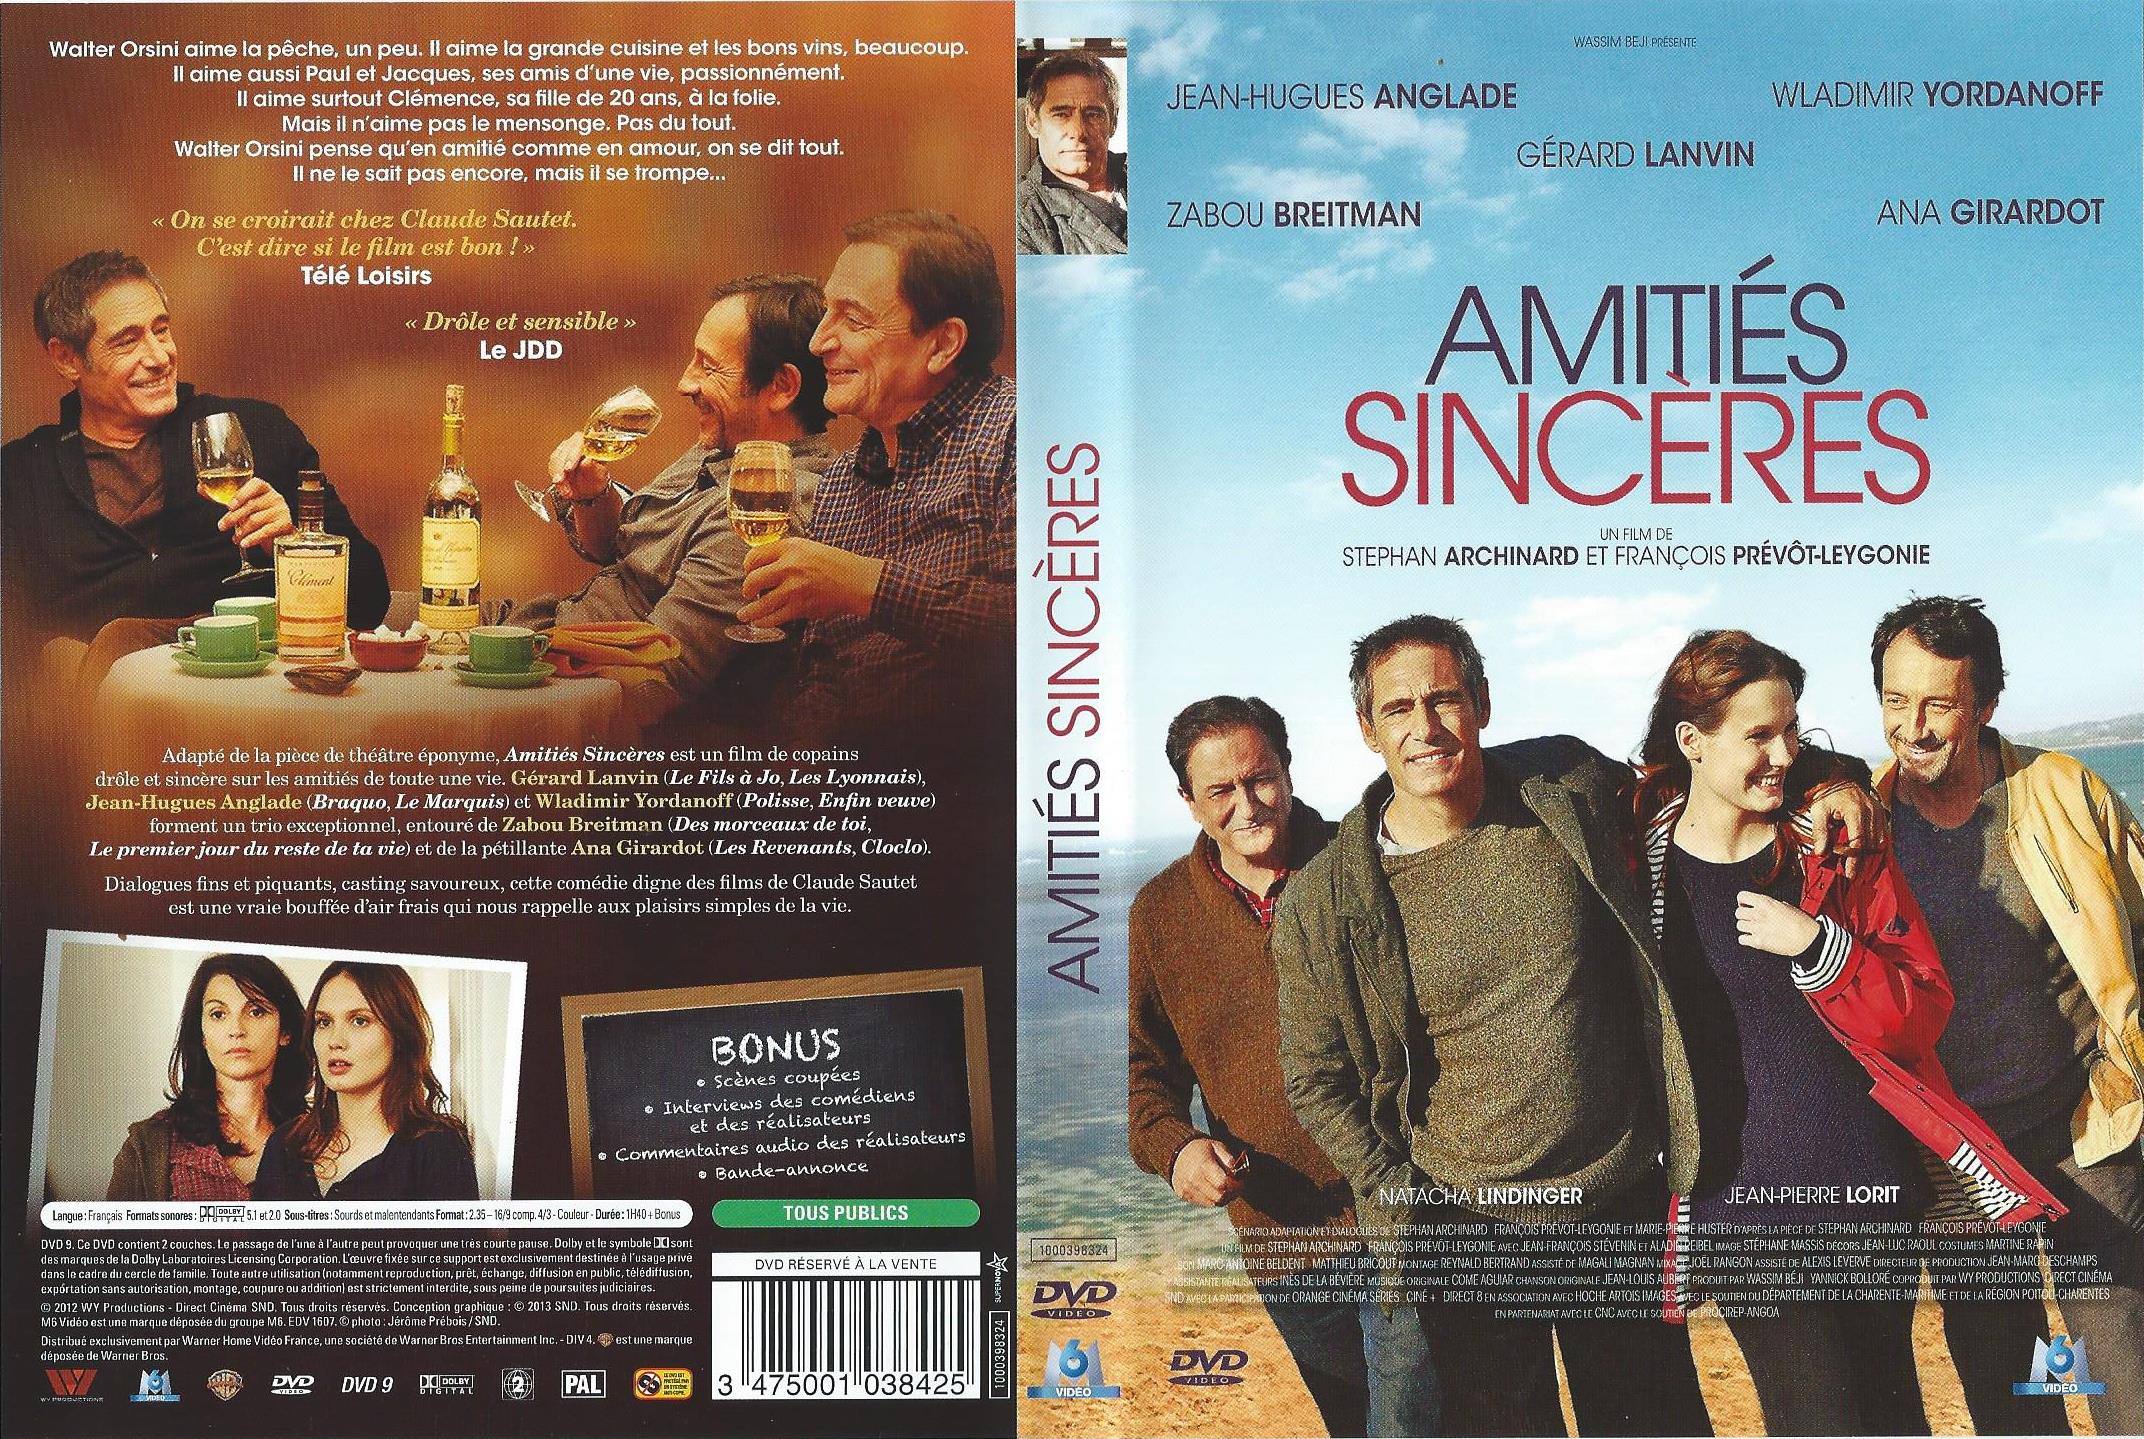 Jaquette DVD Amitis sincres